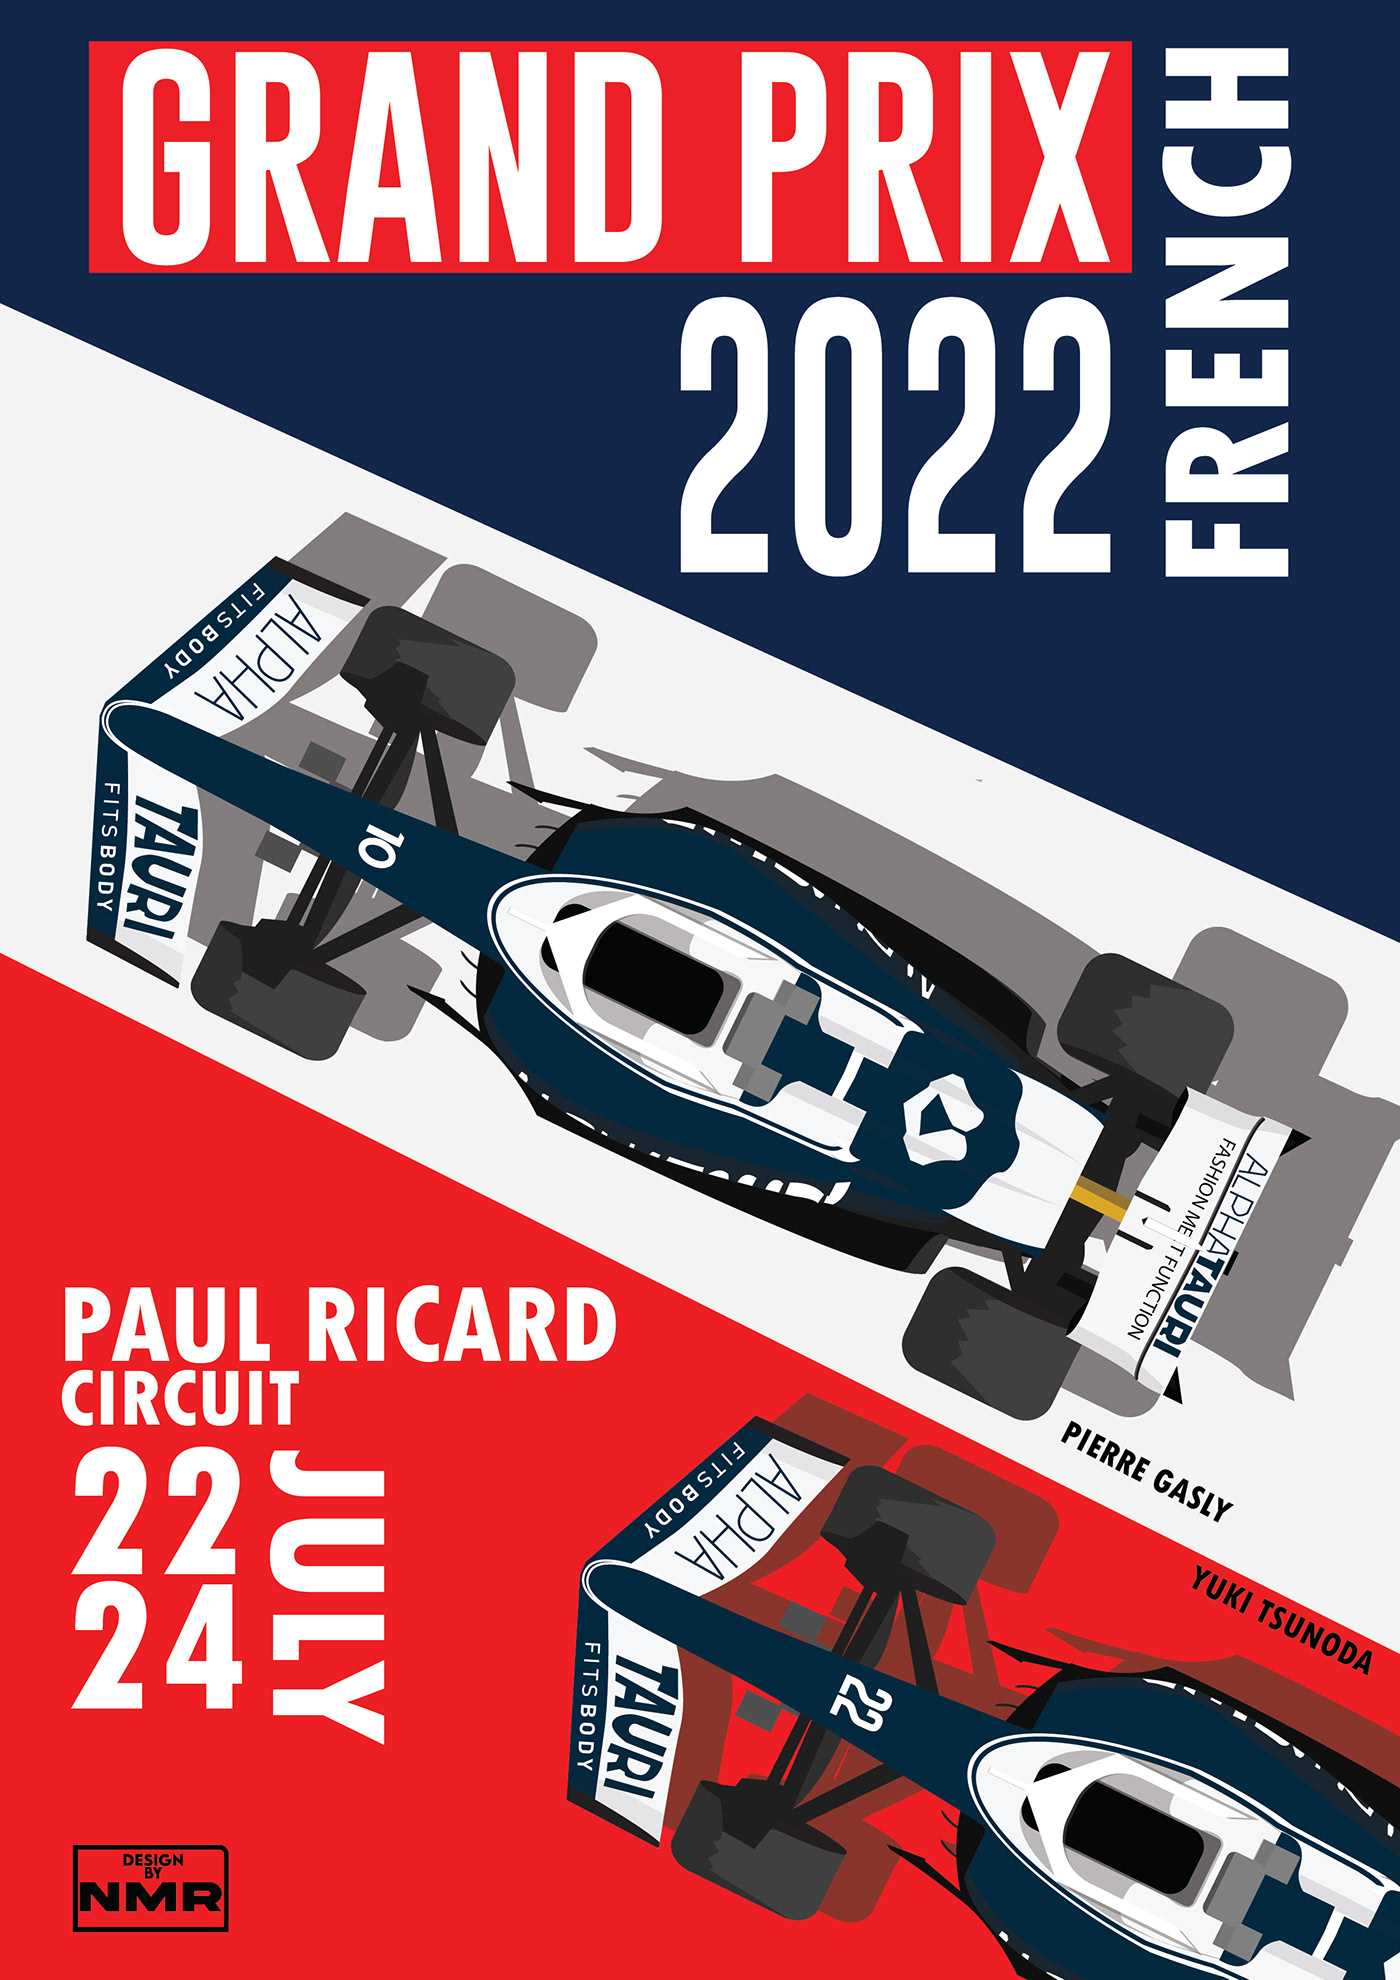 Formula 1 alpha tauri Pierre Gasly Yuki Tsunoda formula 1 poster F1 poster f1 2022 photoshop Racing paul ricard